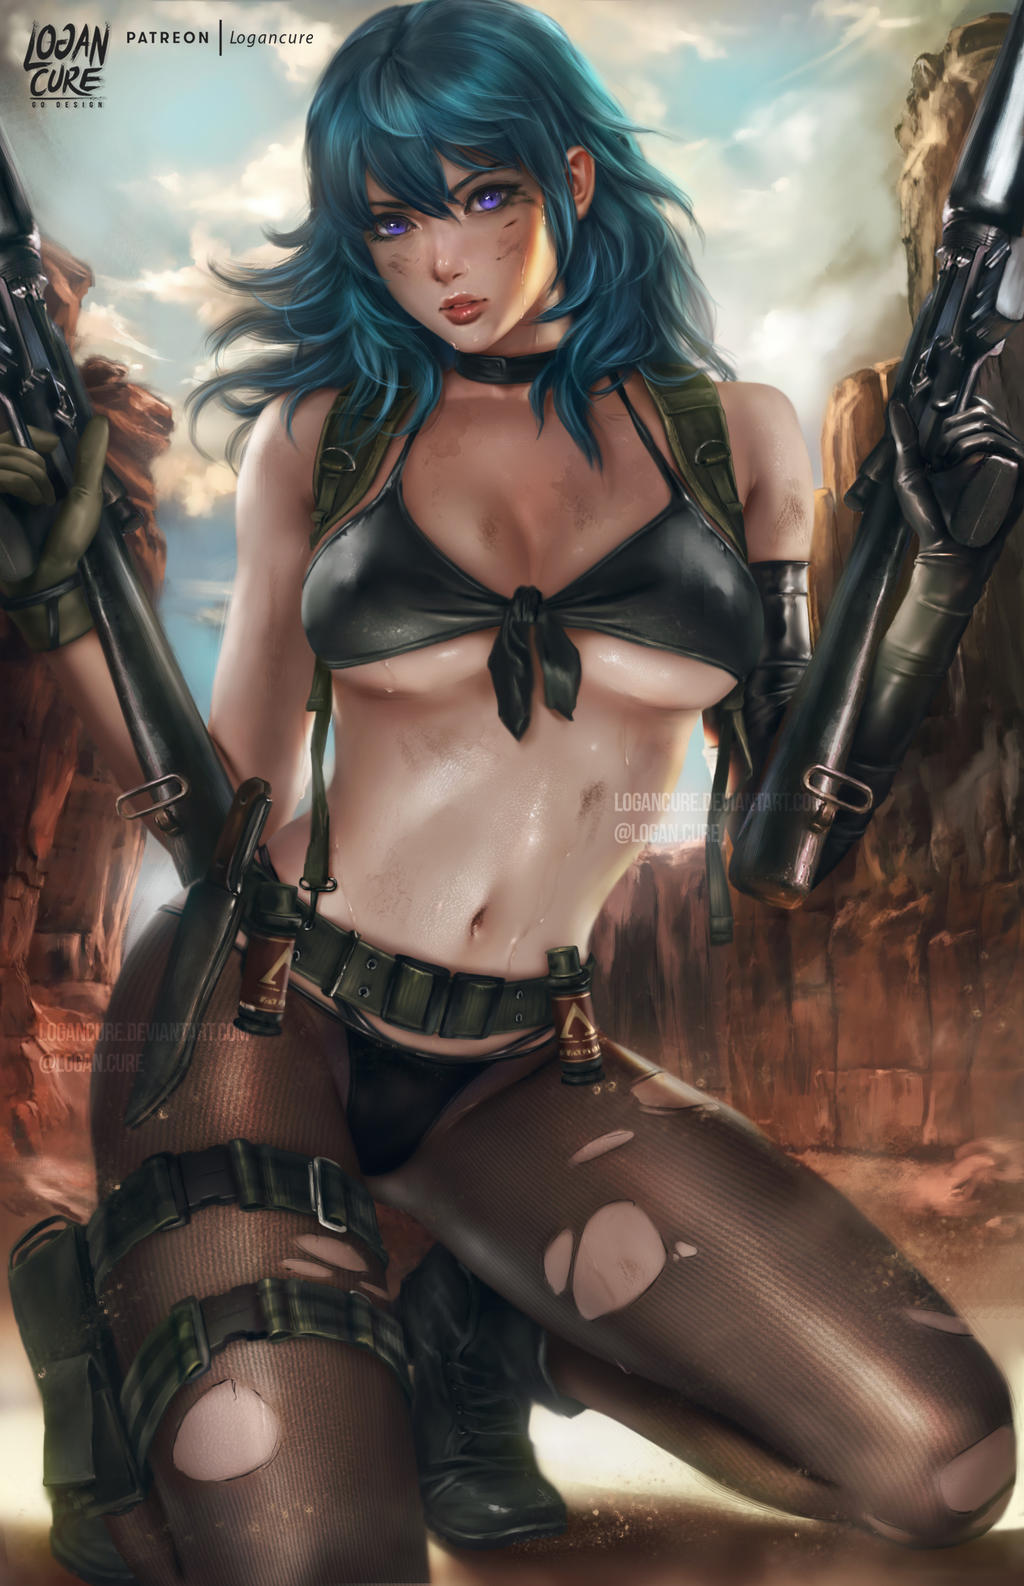 Anime 1024x1586 Logan Cure drawing Fire Emblem women Byleth blue hair bra panties torn pantyhose weapon gun canyon dirty Metal Gear Solid V: The Phantom Pain Quiet (metal gear)